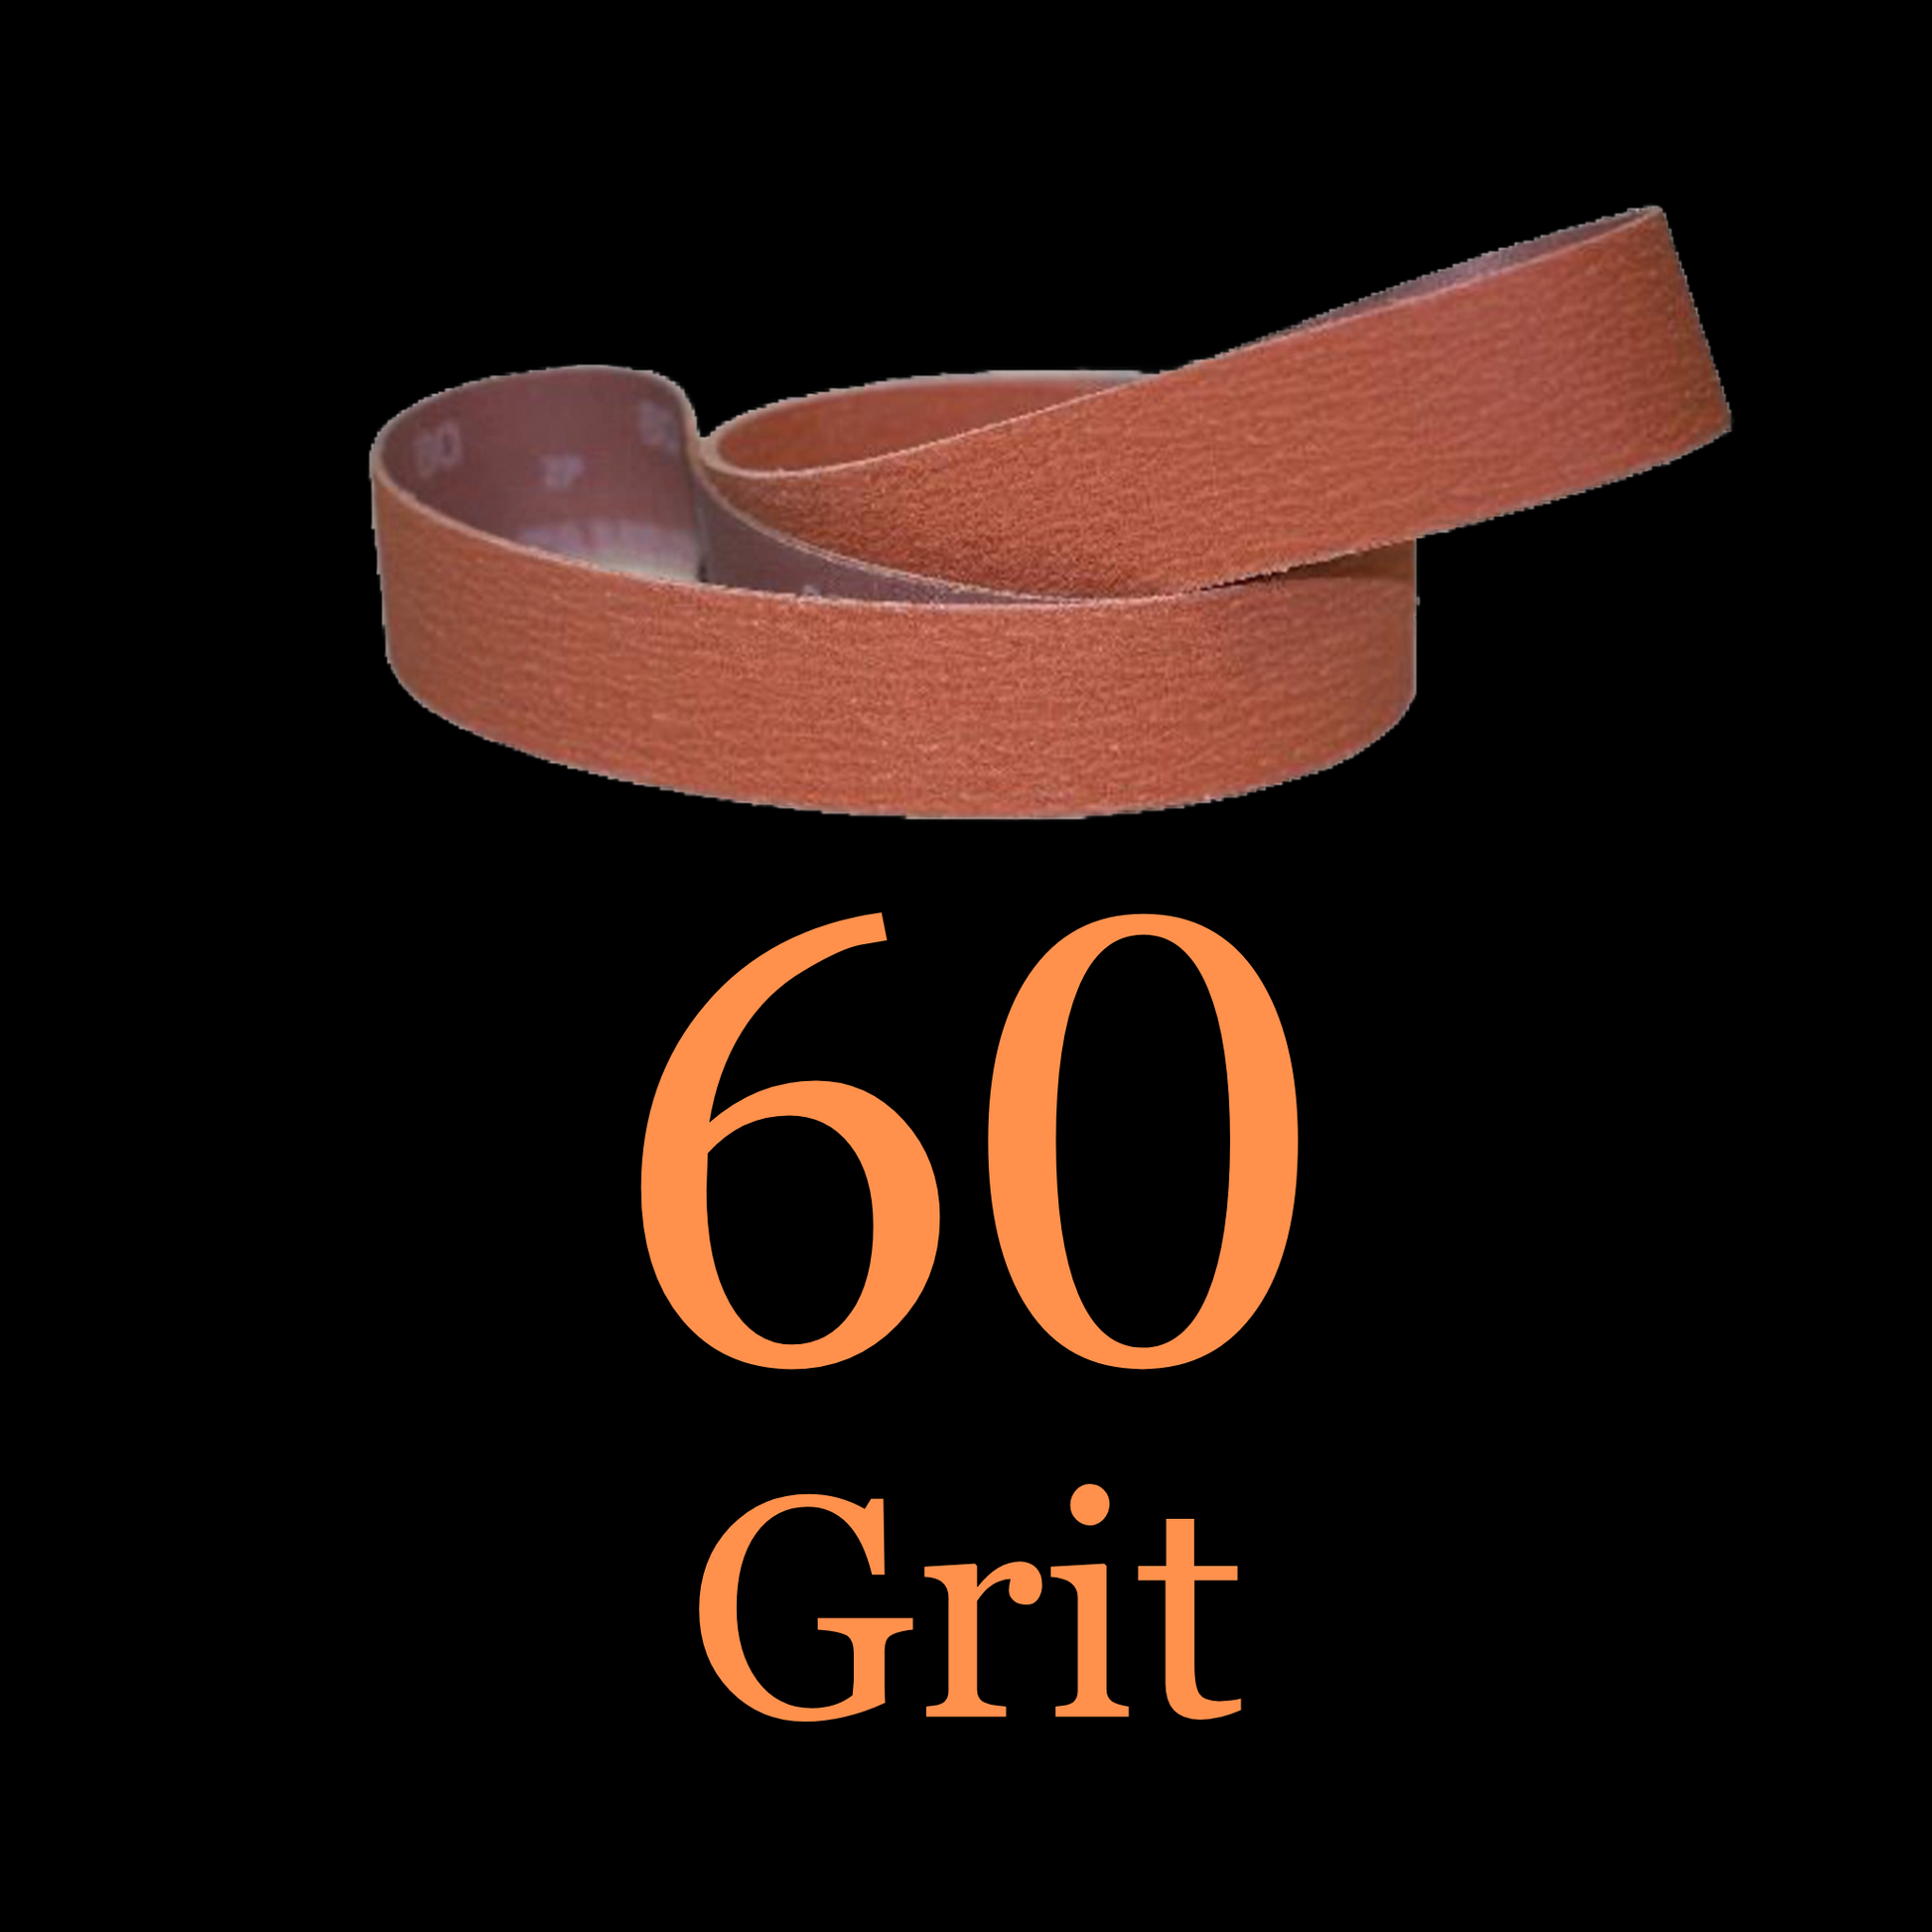 4” x 36” Blaze Ceramic Belt 60 Grit